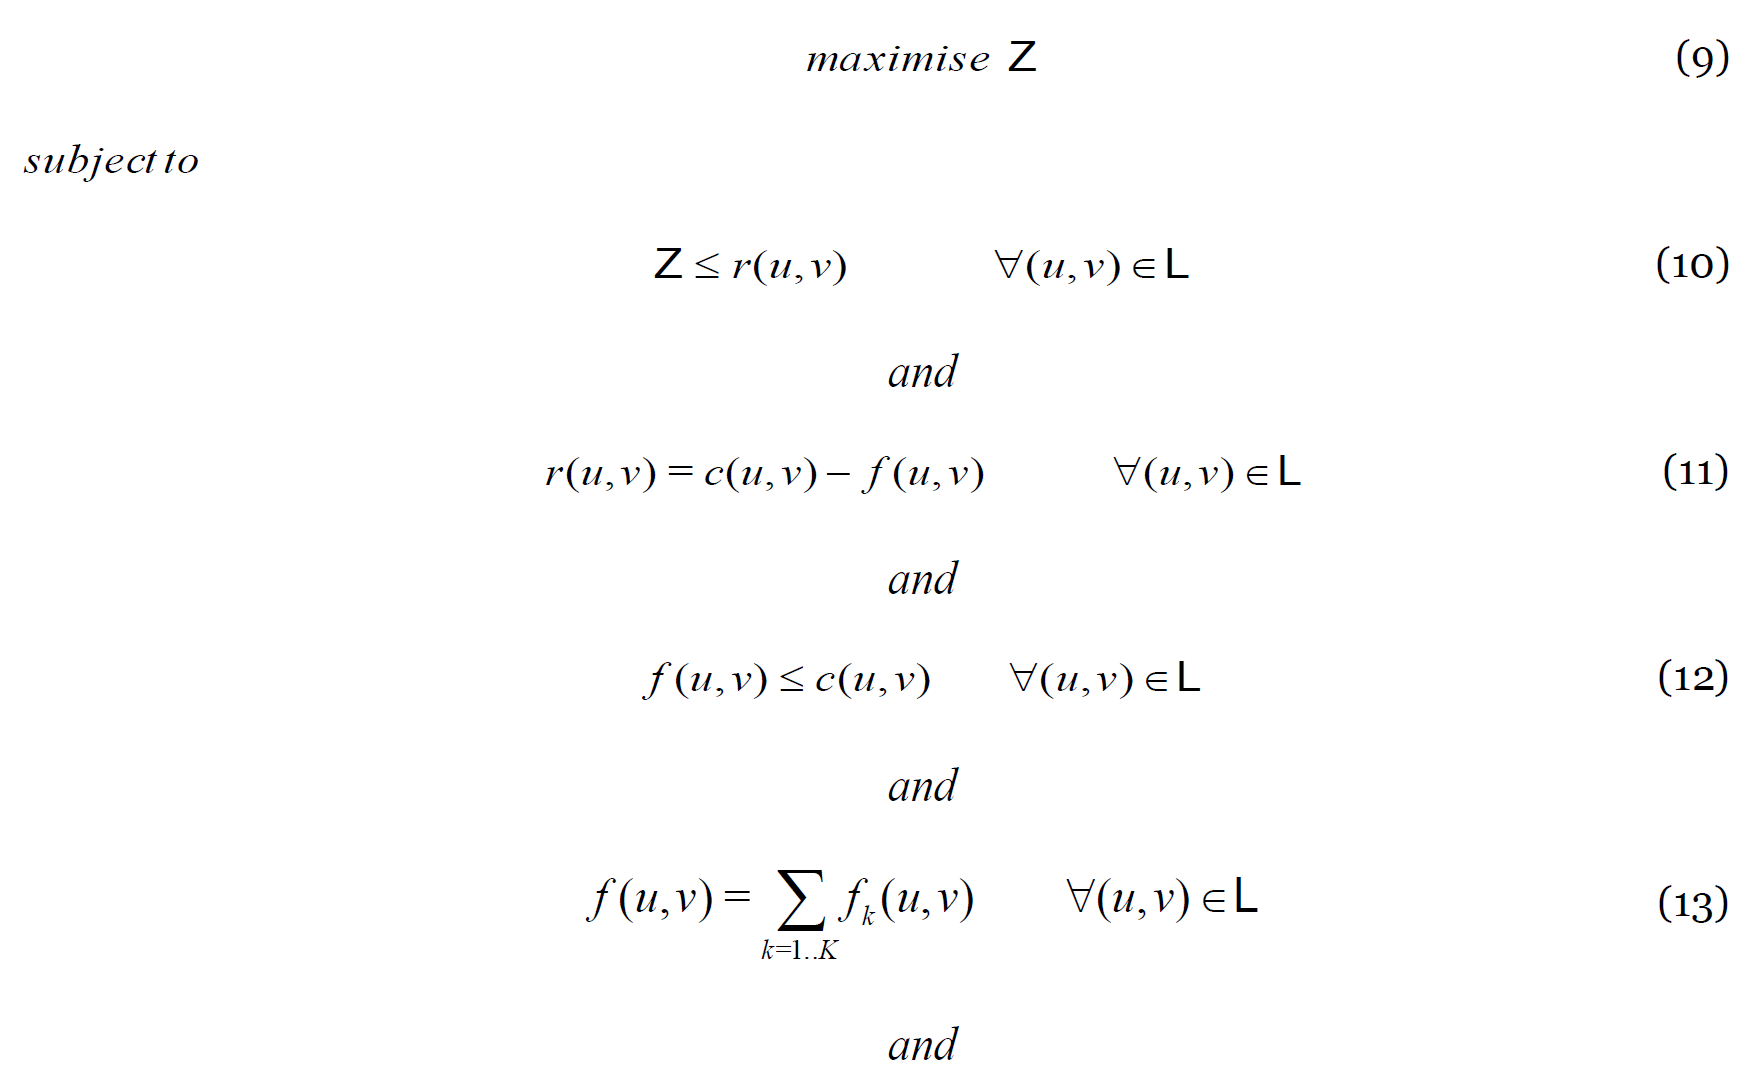 Optimisation problem equations